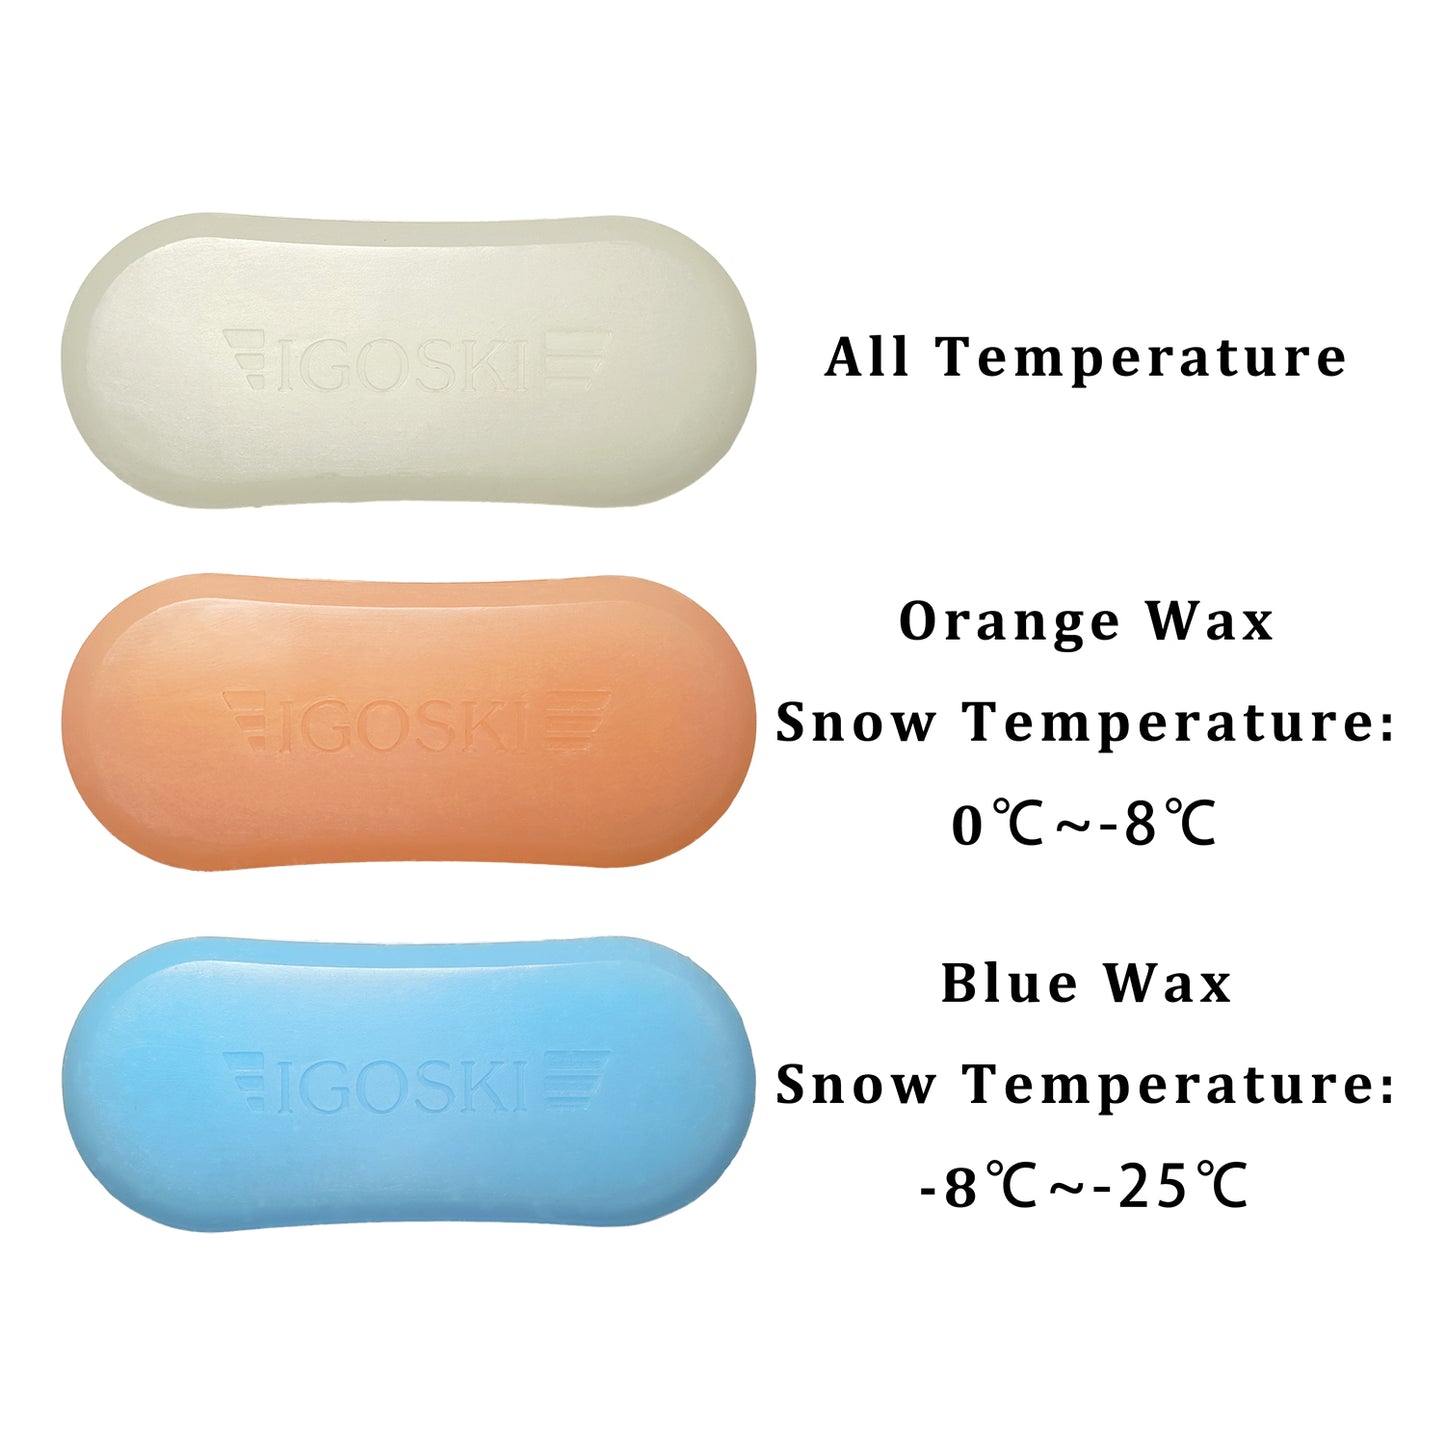 IGOSKI 3 Packs Ski and Snowboard Wax All Temperature Ultimate Ski and Snowboard Wax Kit 300g in Total